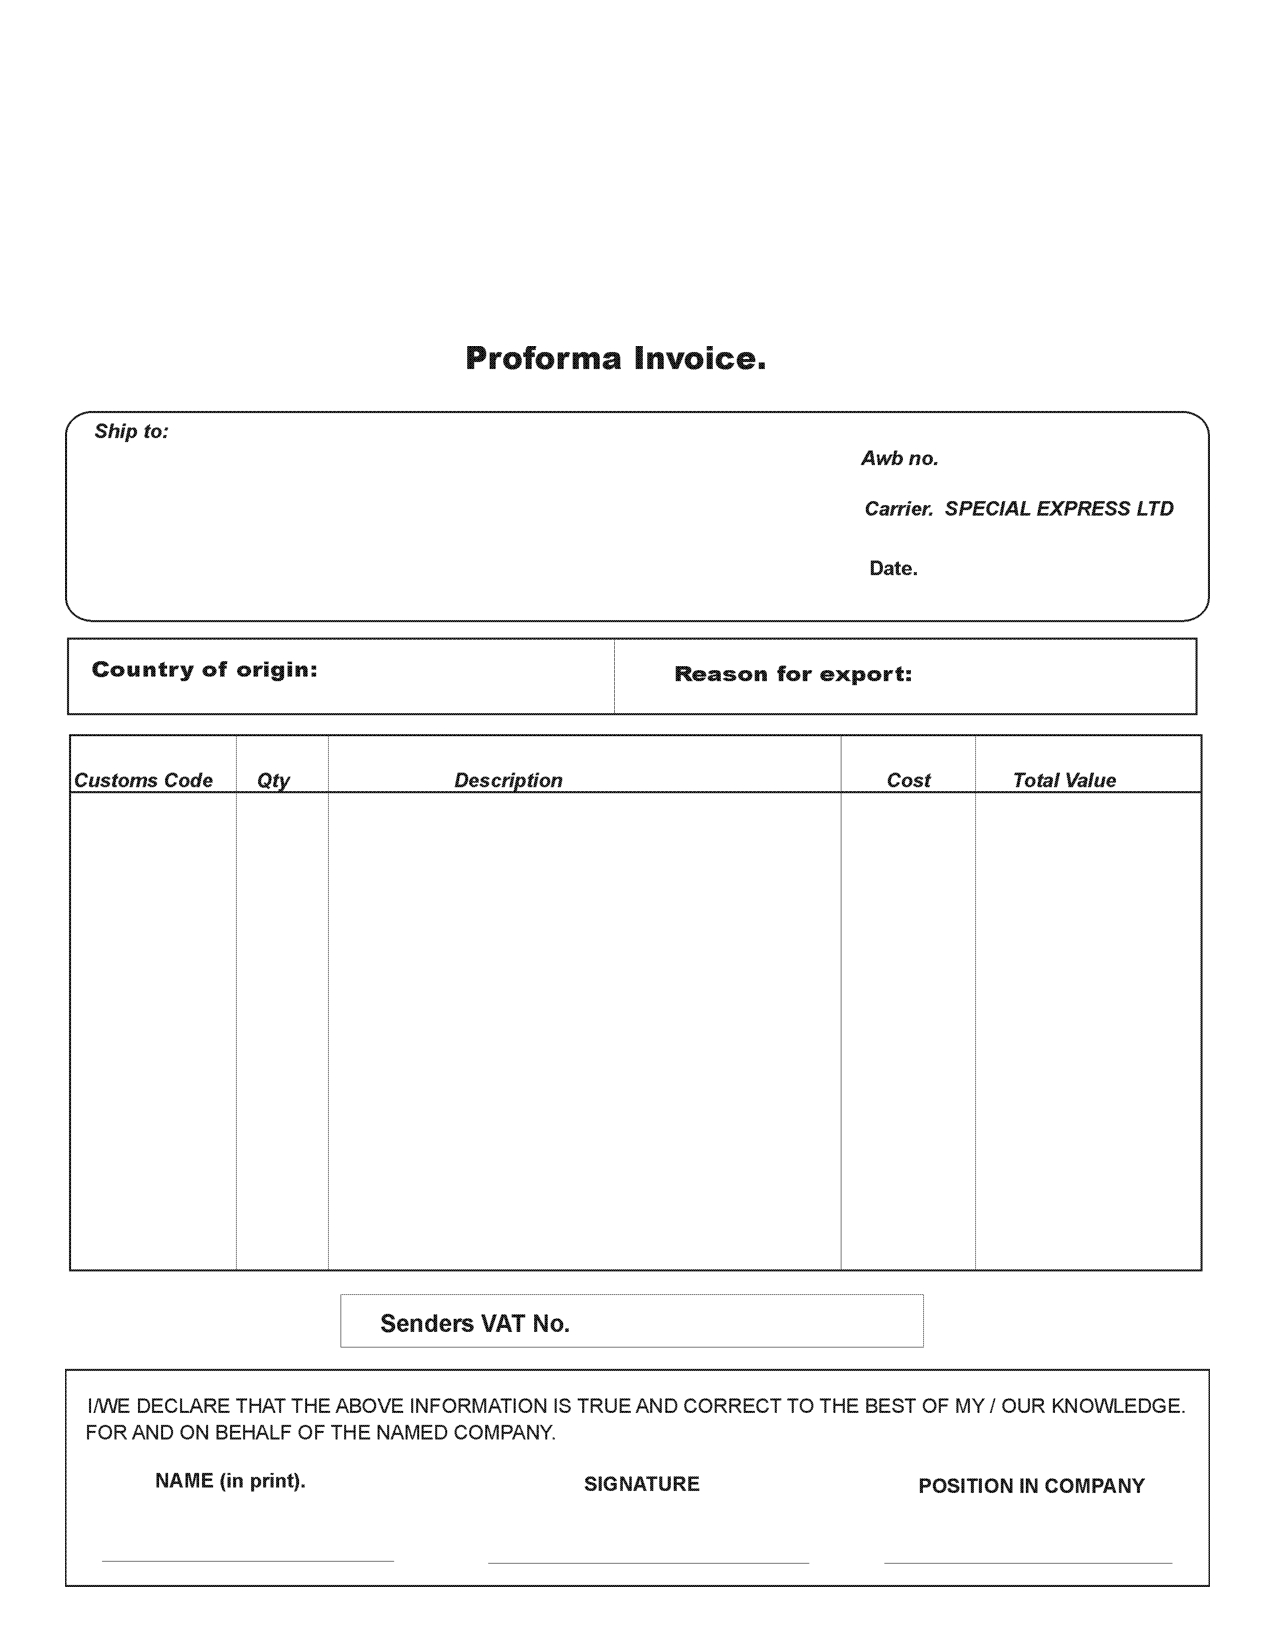 proforma invoice template pdf invoice example pdf tax invoice tax invoice proforma